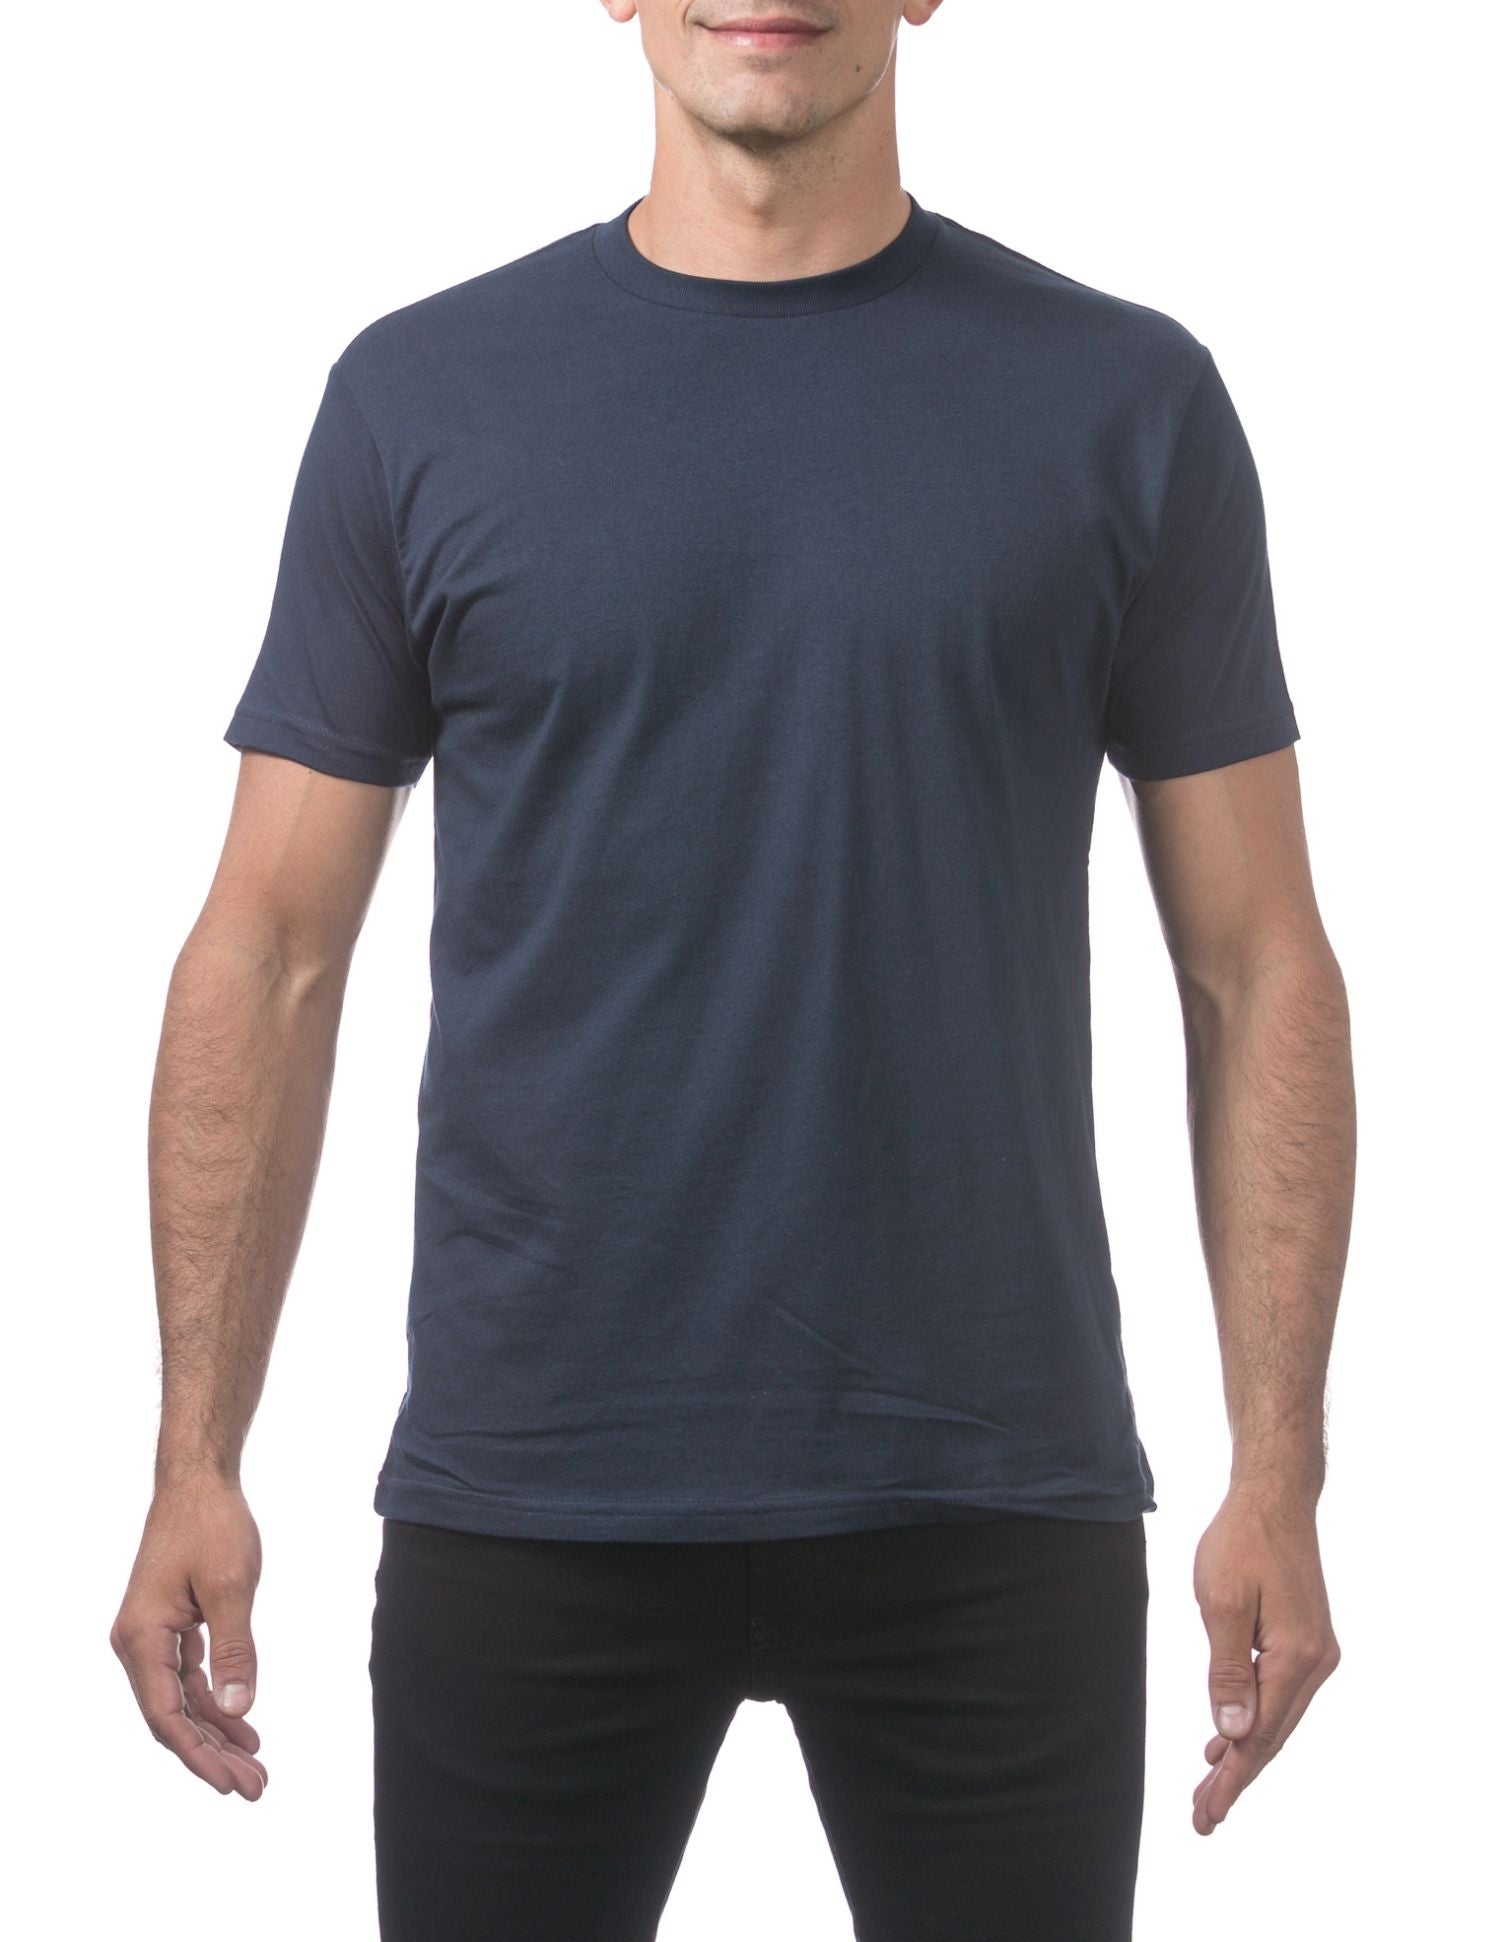 Pro Club Men's Comfort Cotton Short Sleeve T-Shirt - Navy Blue - Small - Pro-Distributing